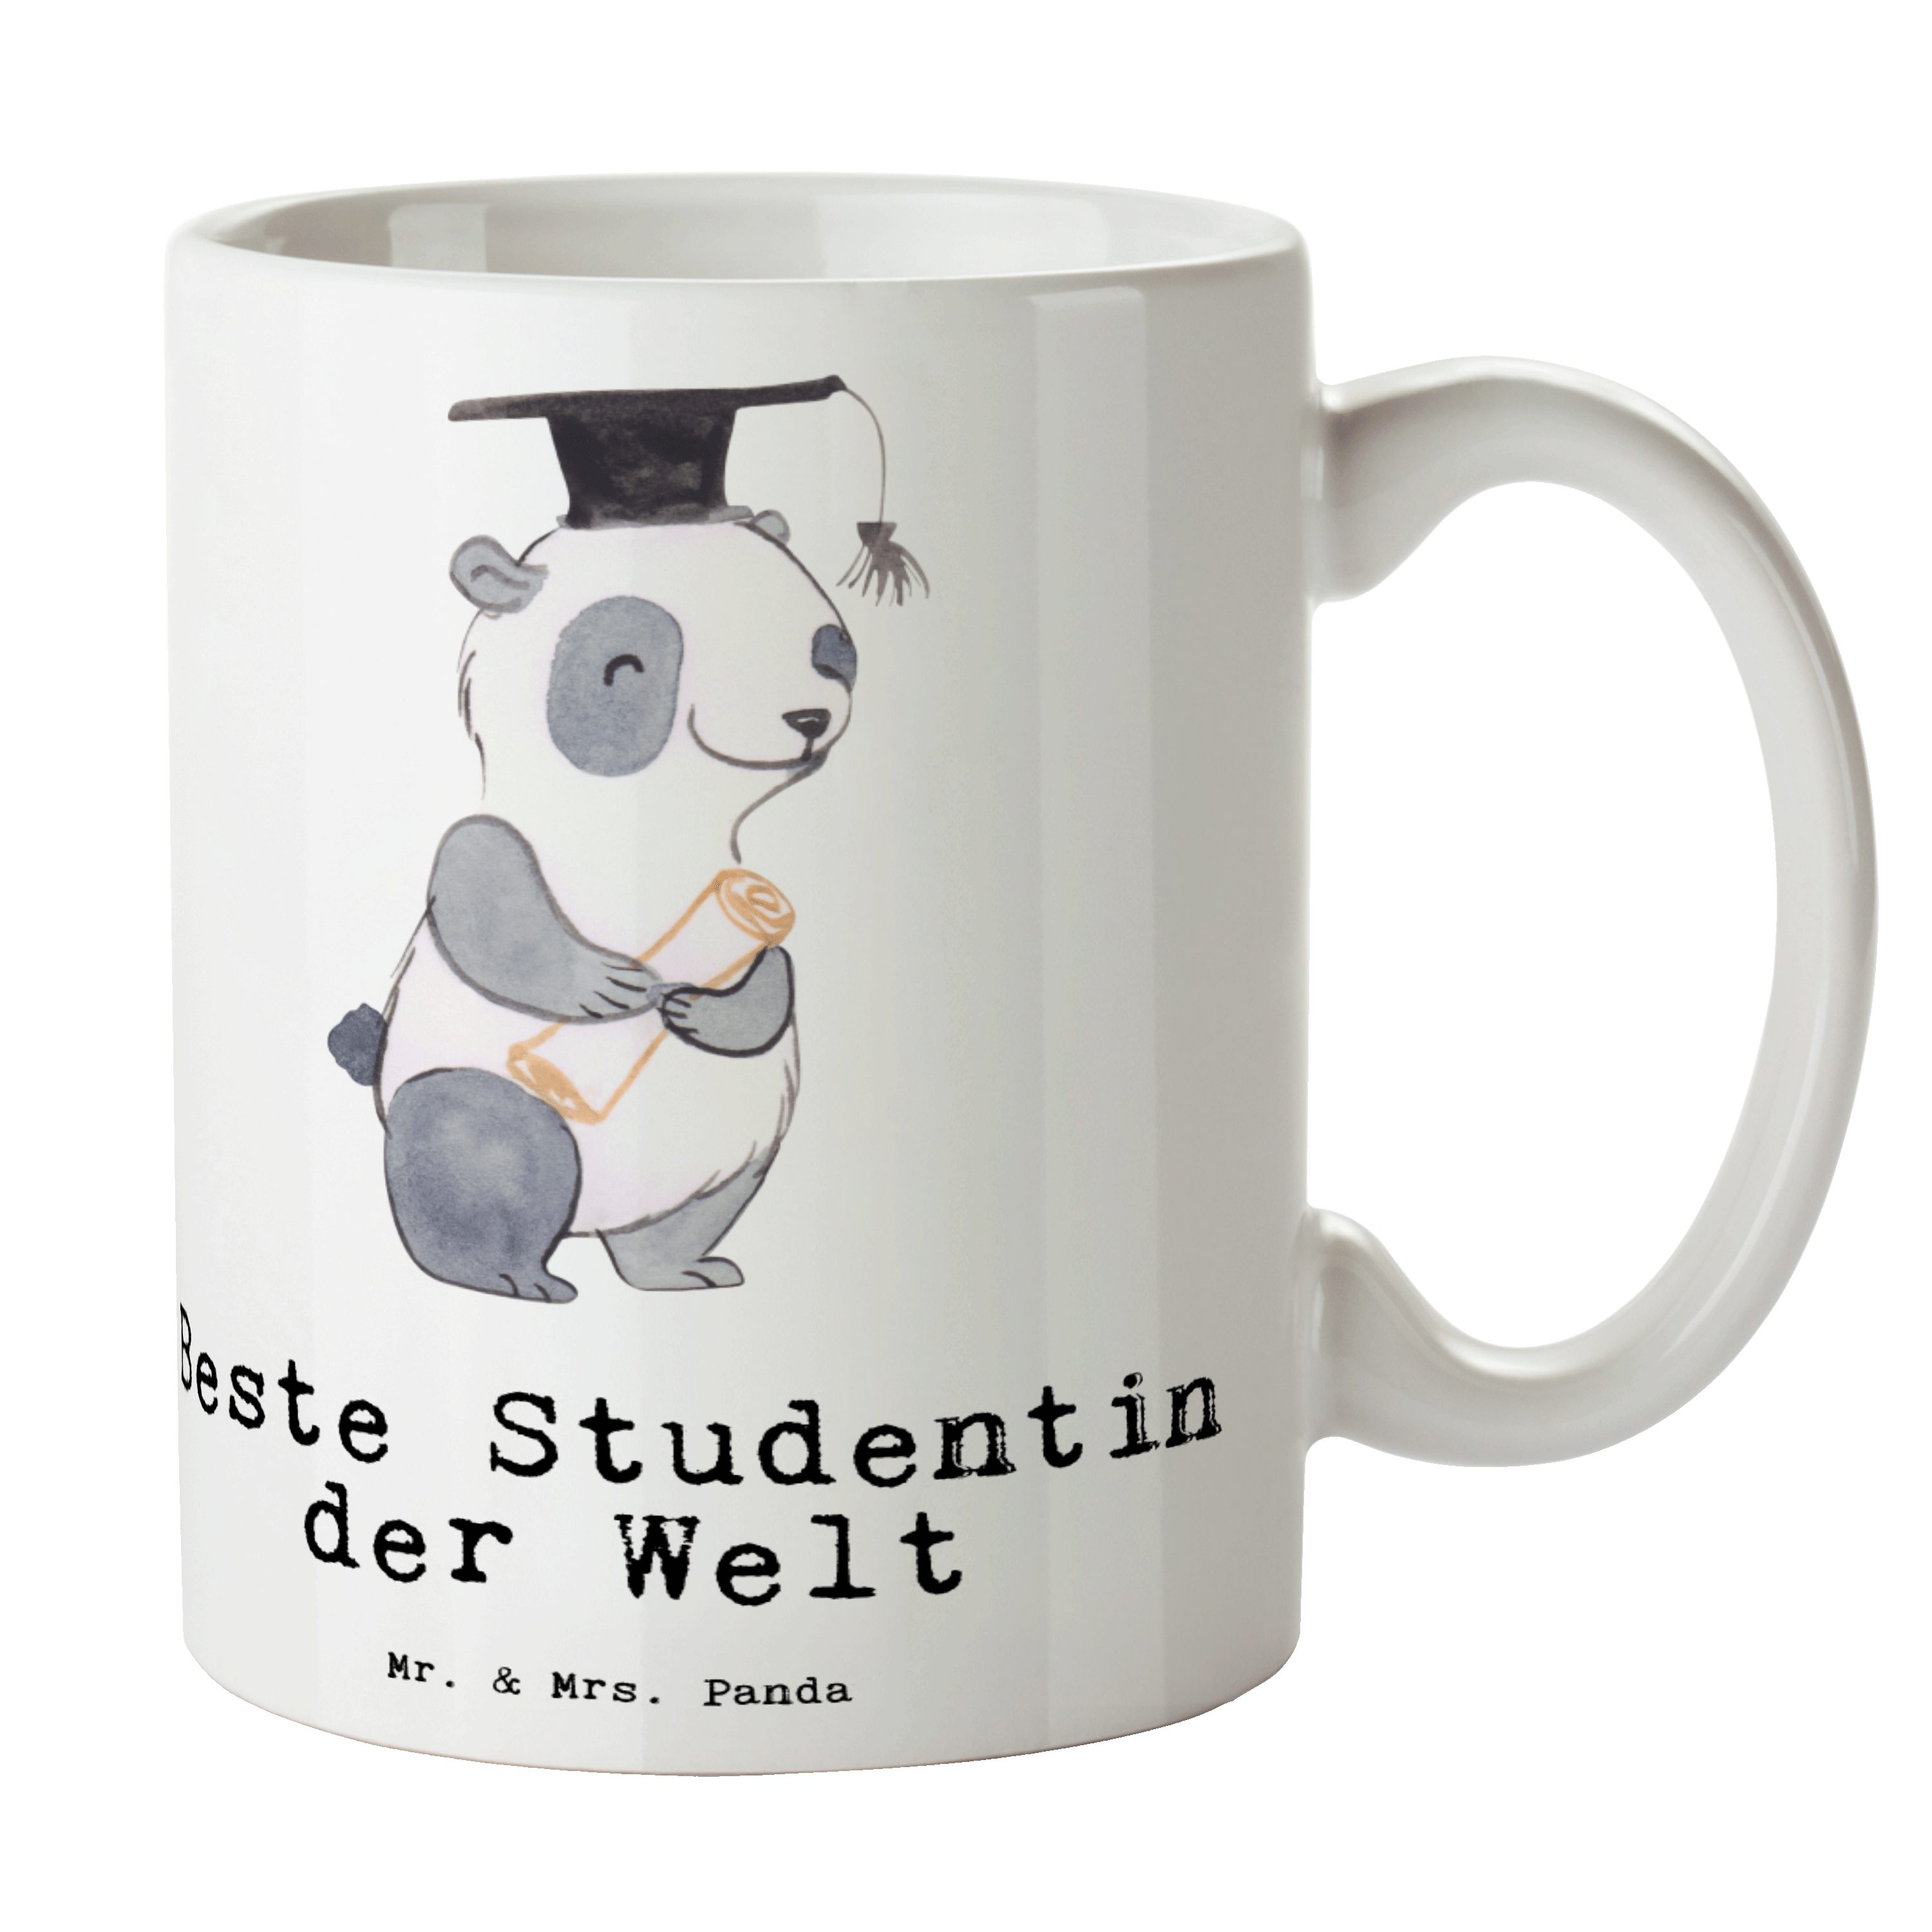 Mr. & Mrs. Panda Universität, - Beste Bedanken, Becher, Studenten, Welt der Geschenk, Alumni, - Weiß Keramik Kaffeetasse, Dankeschön, Panda Geschenkidee, Studentin Tasse Büro, Tee